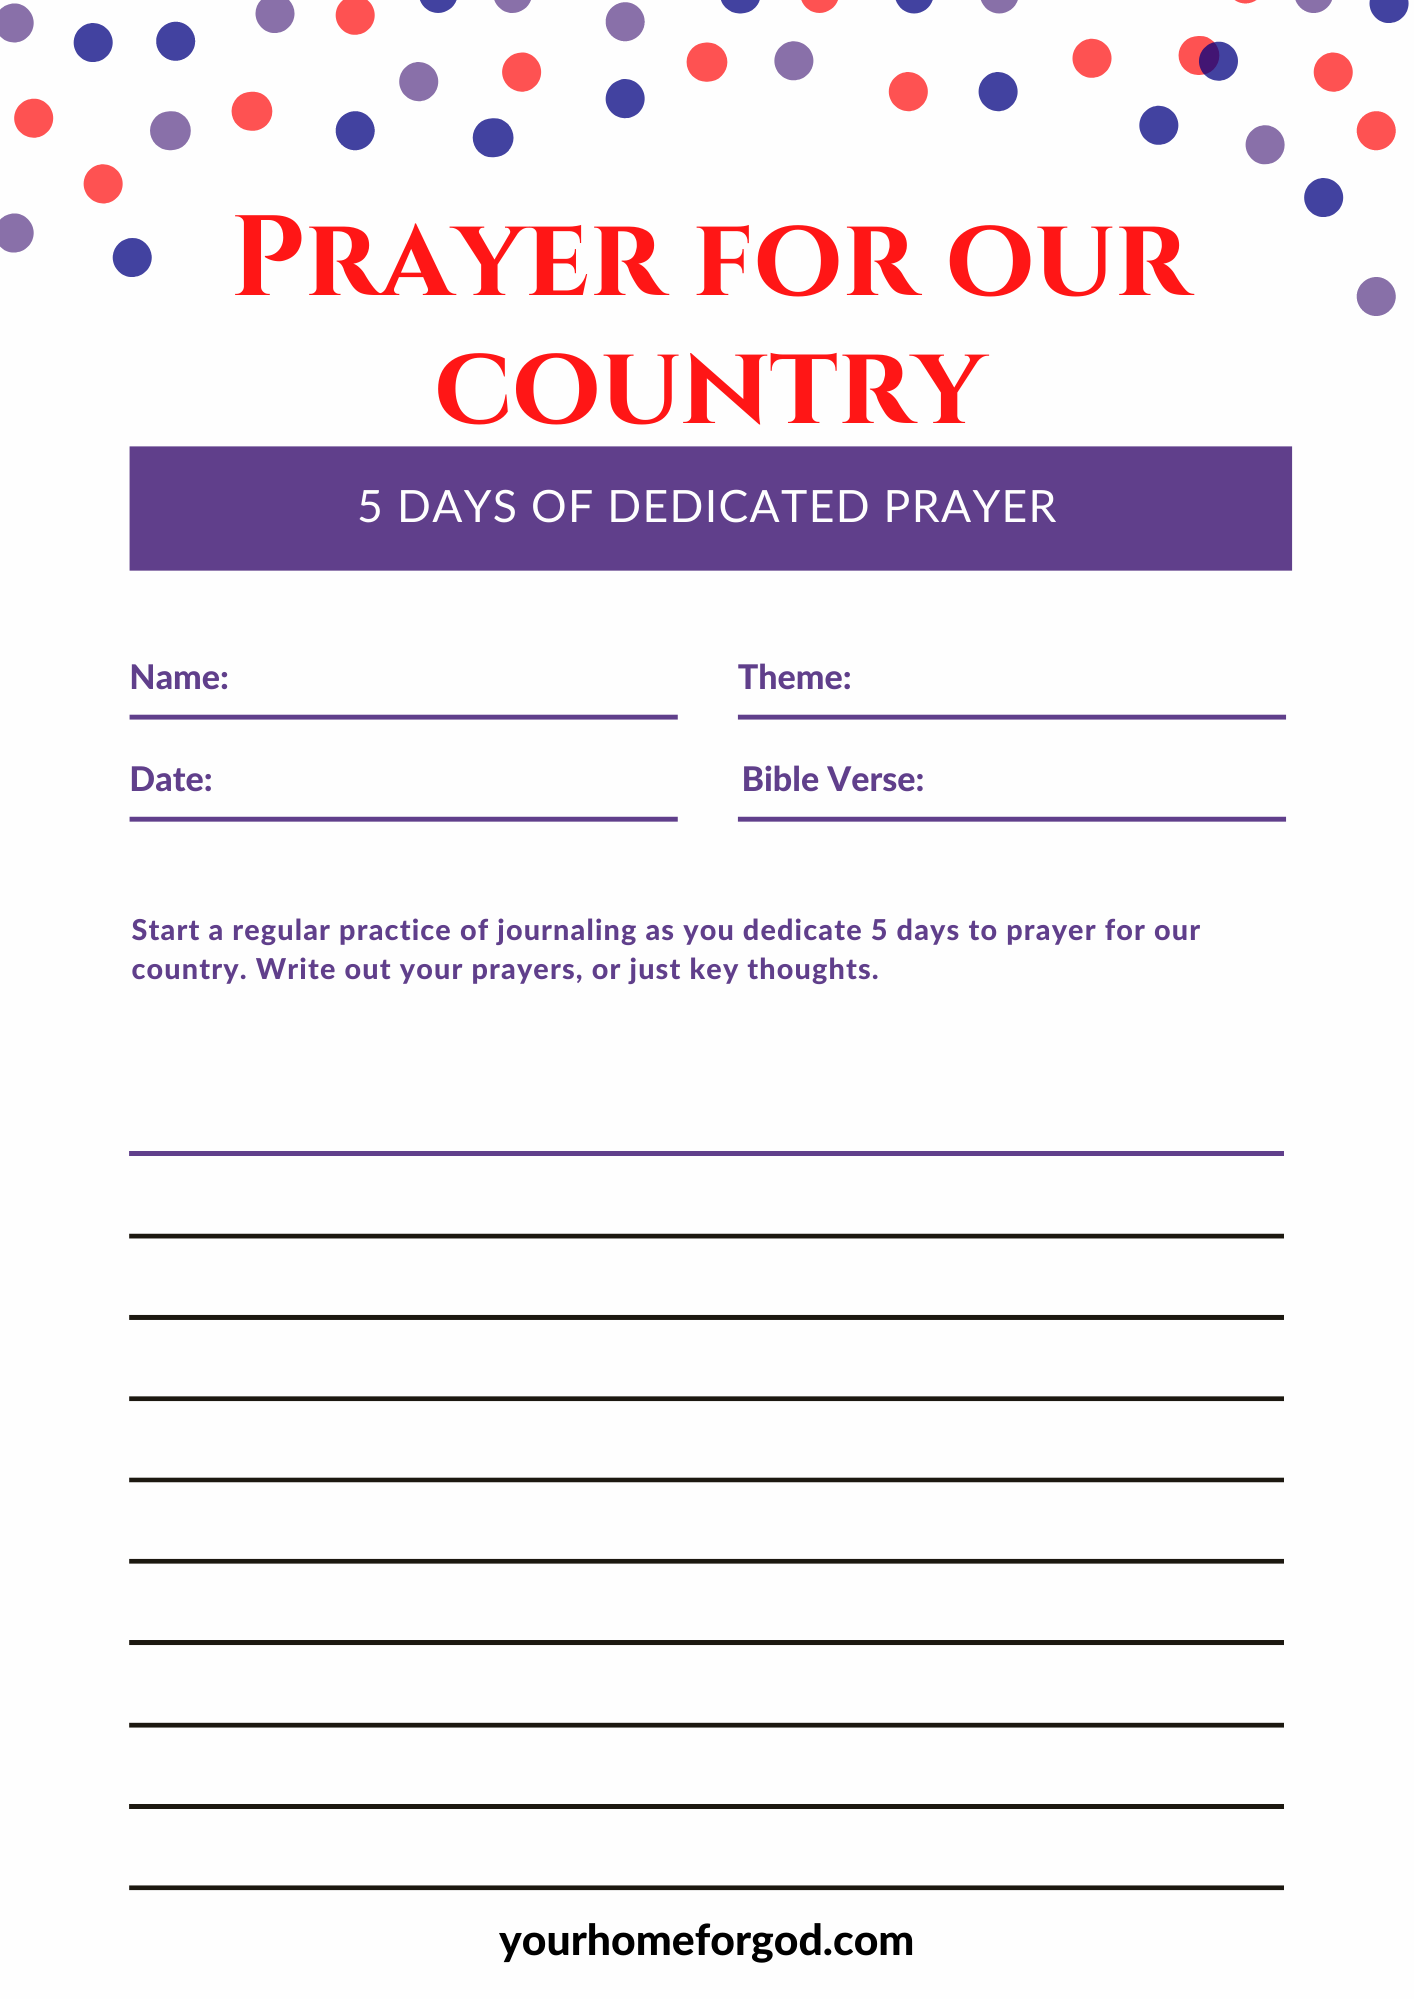 The Patriotic Prayer Journaling Kit